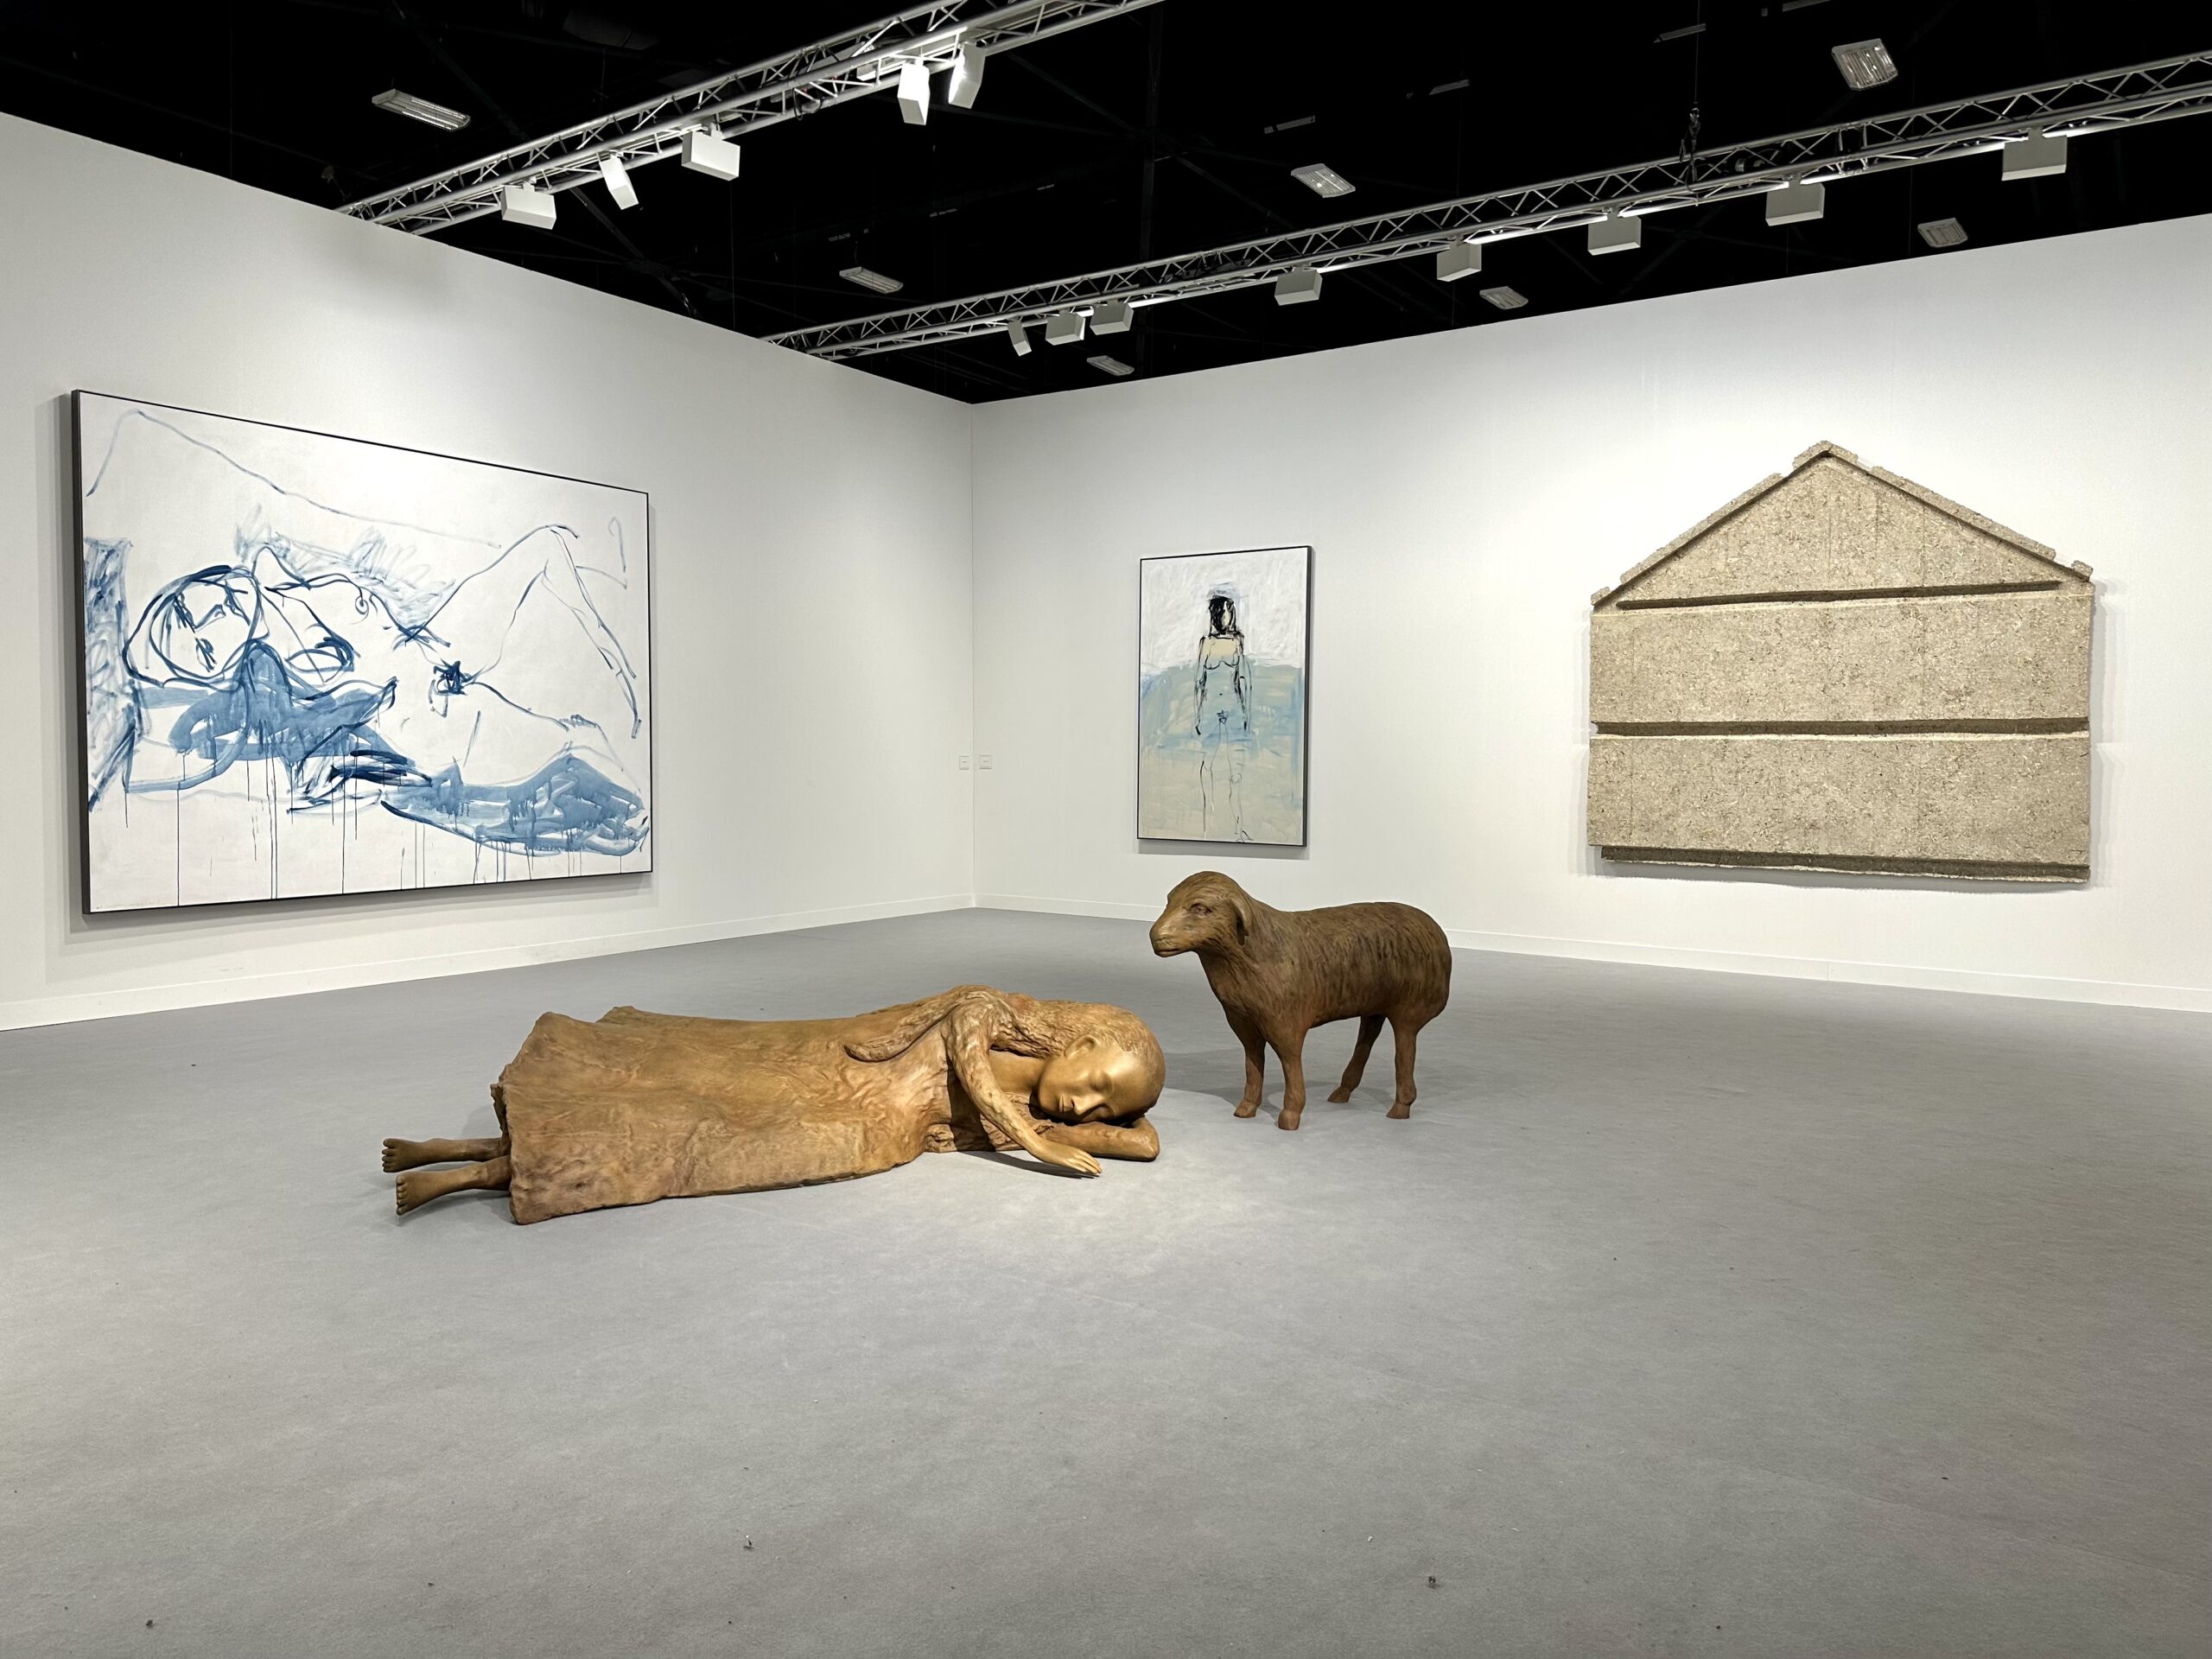 Best of Art Basel 2022: 15 Highlights from Miami Art Week